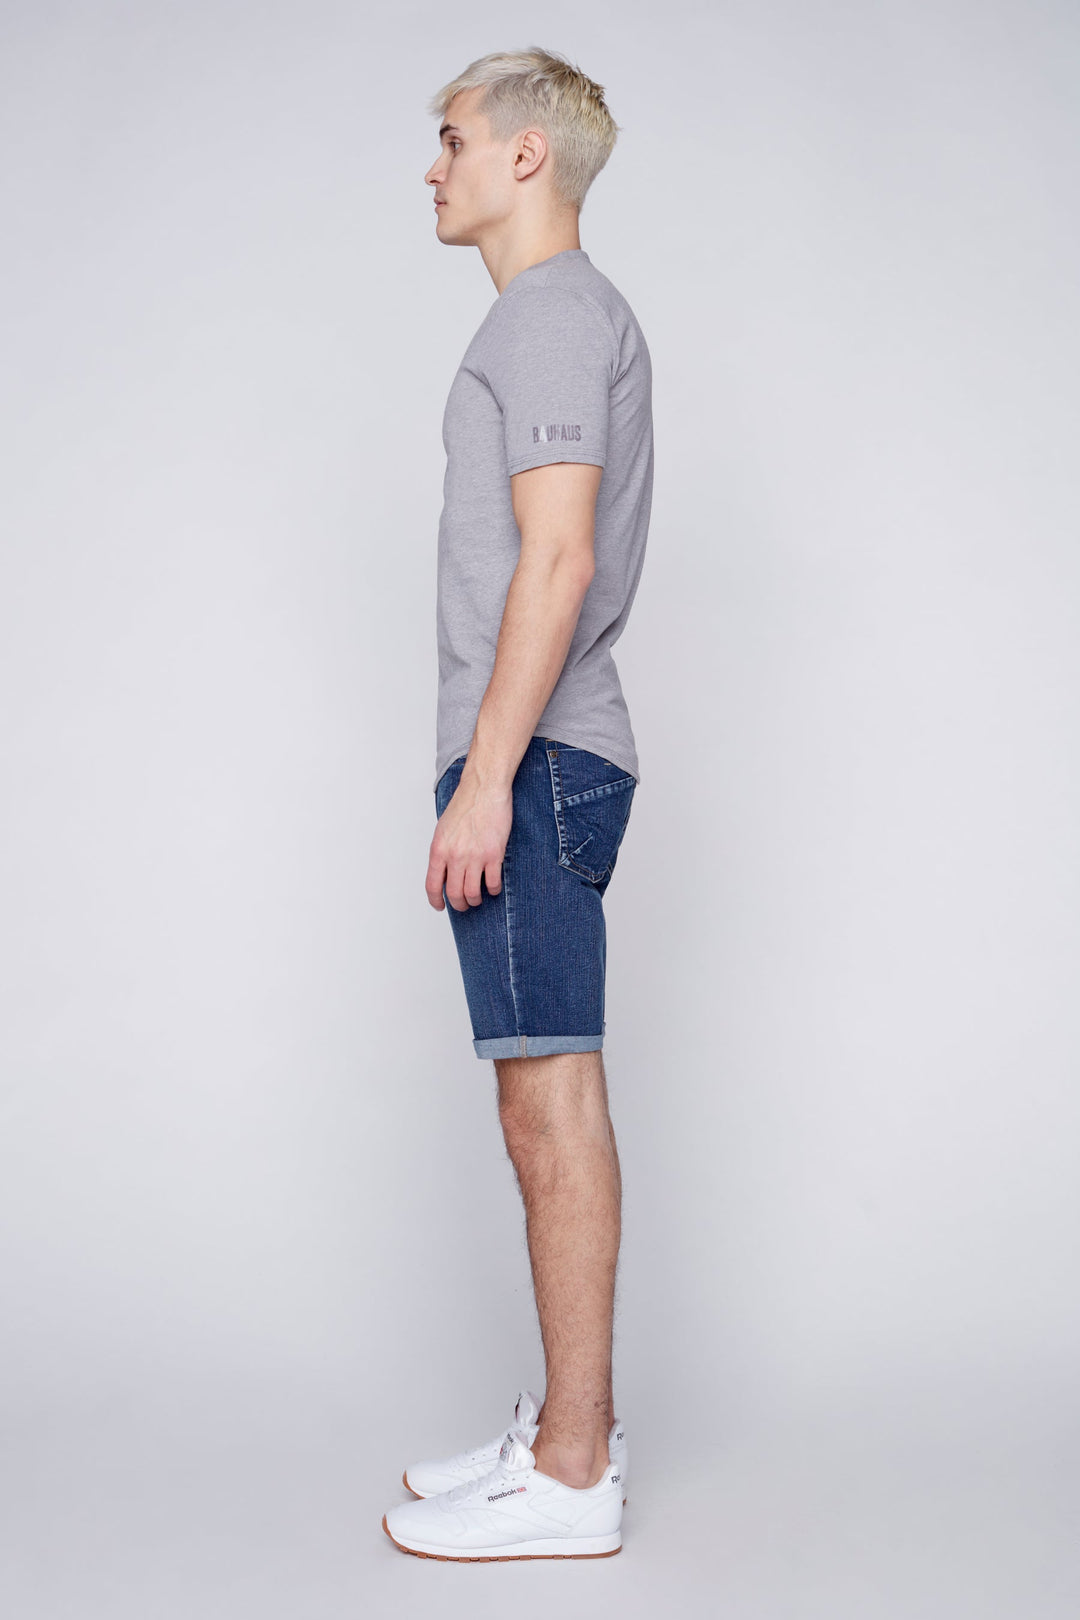 LENNON - Mens Rolled-Up Shorts - Classic Medium Blue